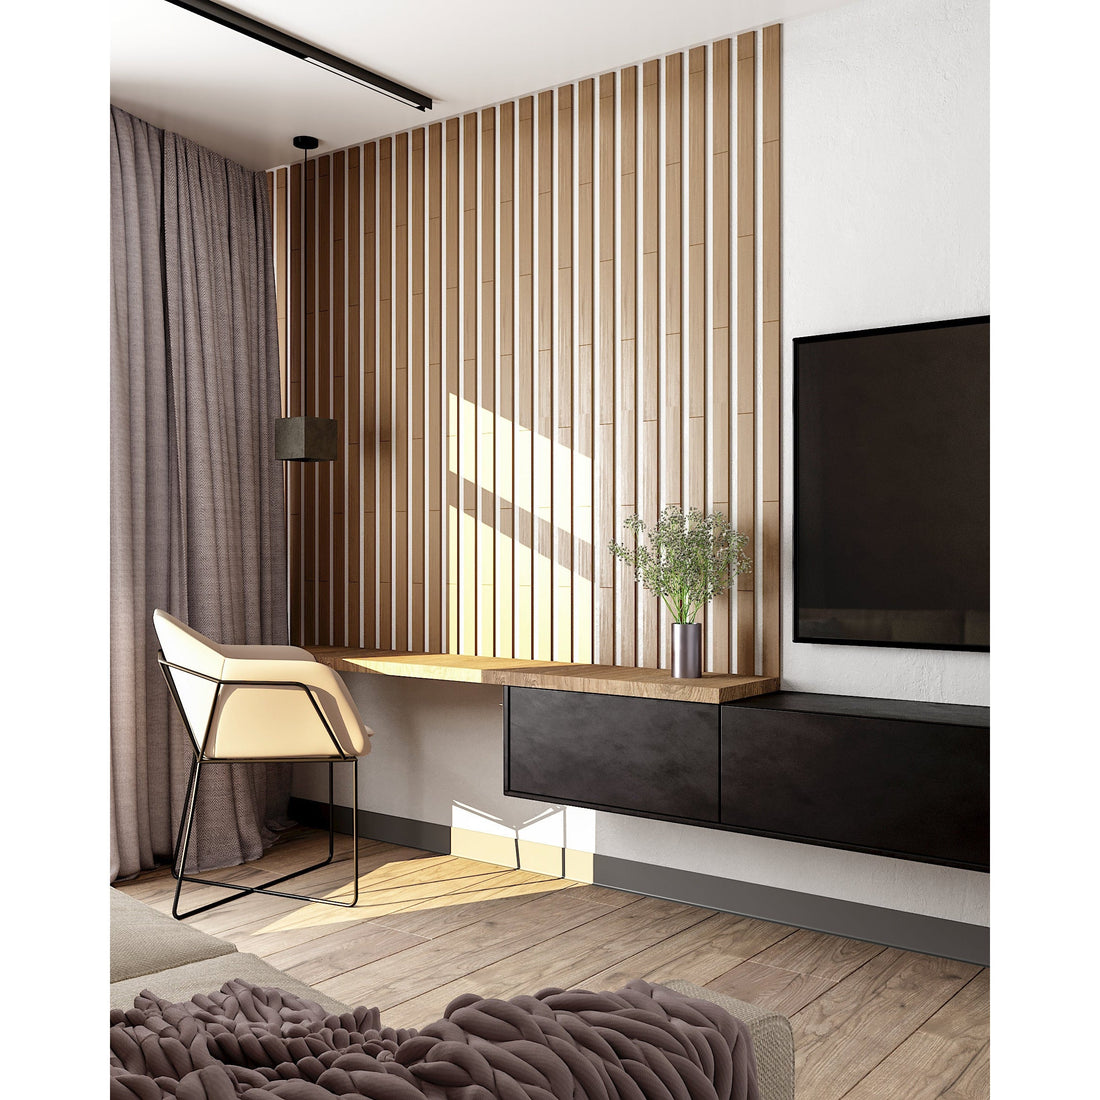 Solid Wood Slats ✔️ Custom-made Vertical Wooden Slats